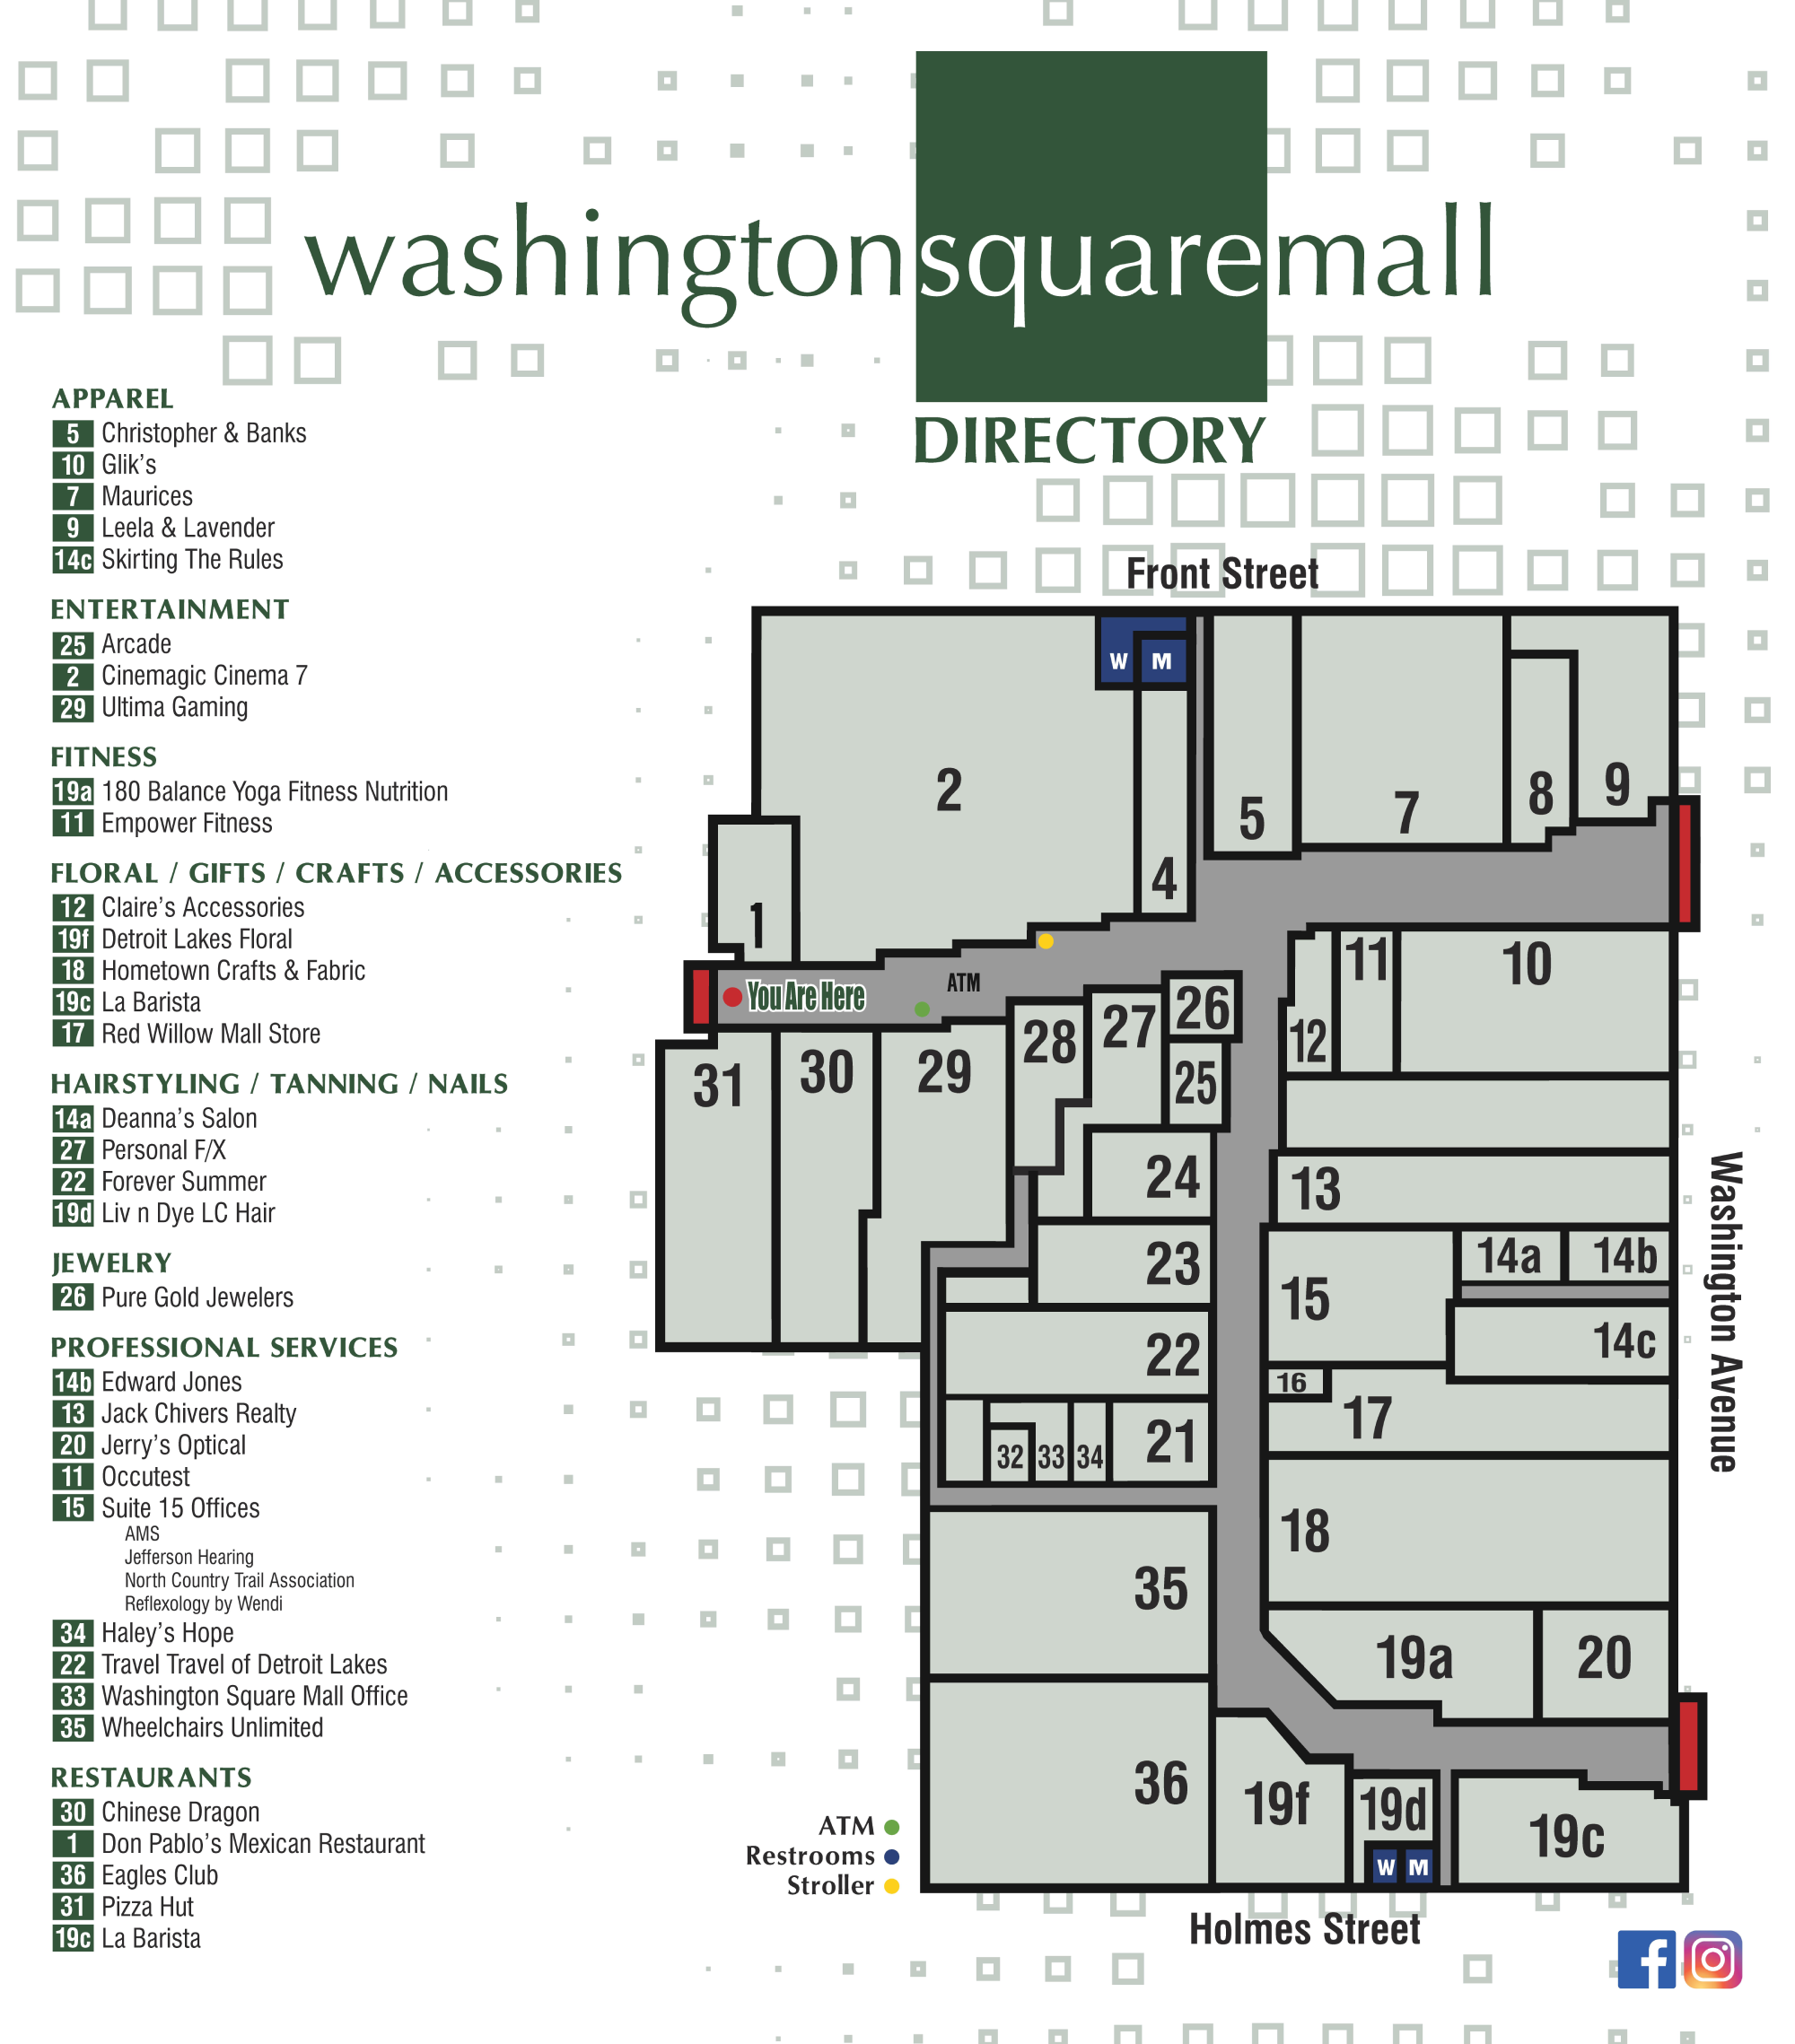 2020 Mall Directory.webp